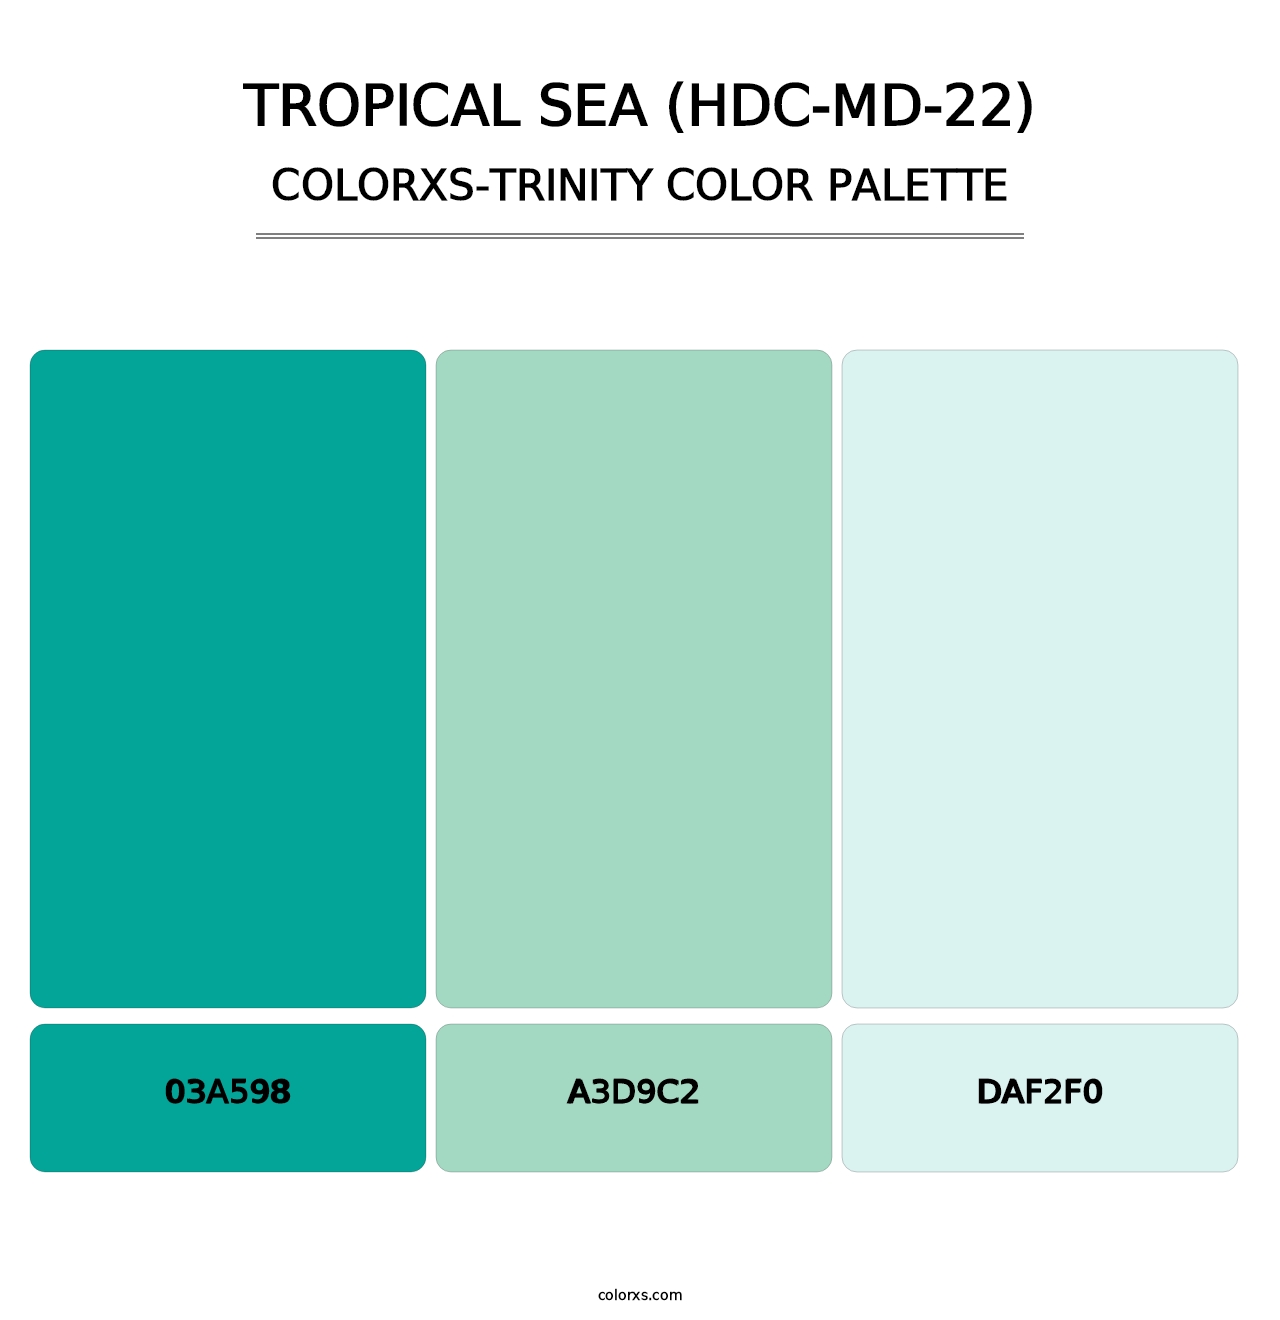 Tropical Sea (HDC-MD-22) - Colorxs Trinity Palette